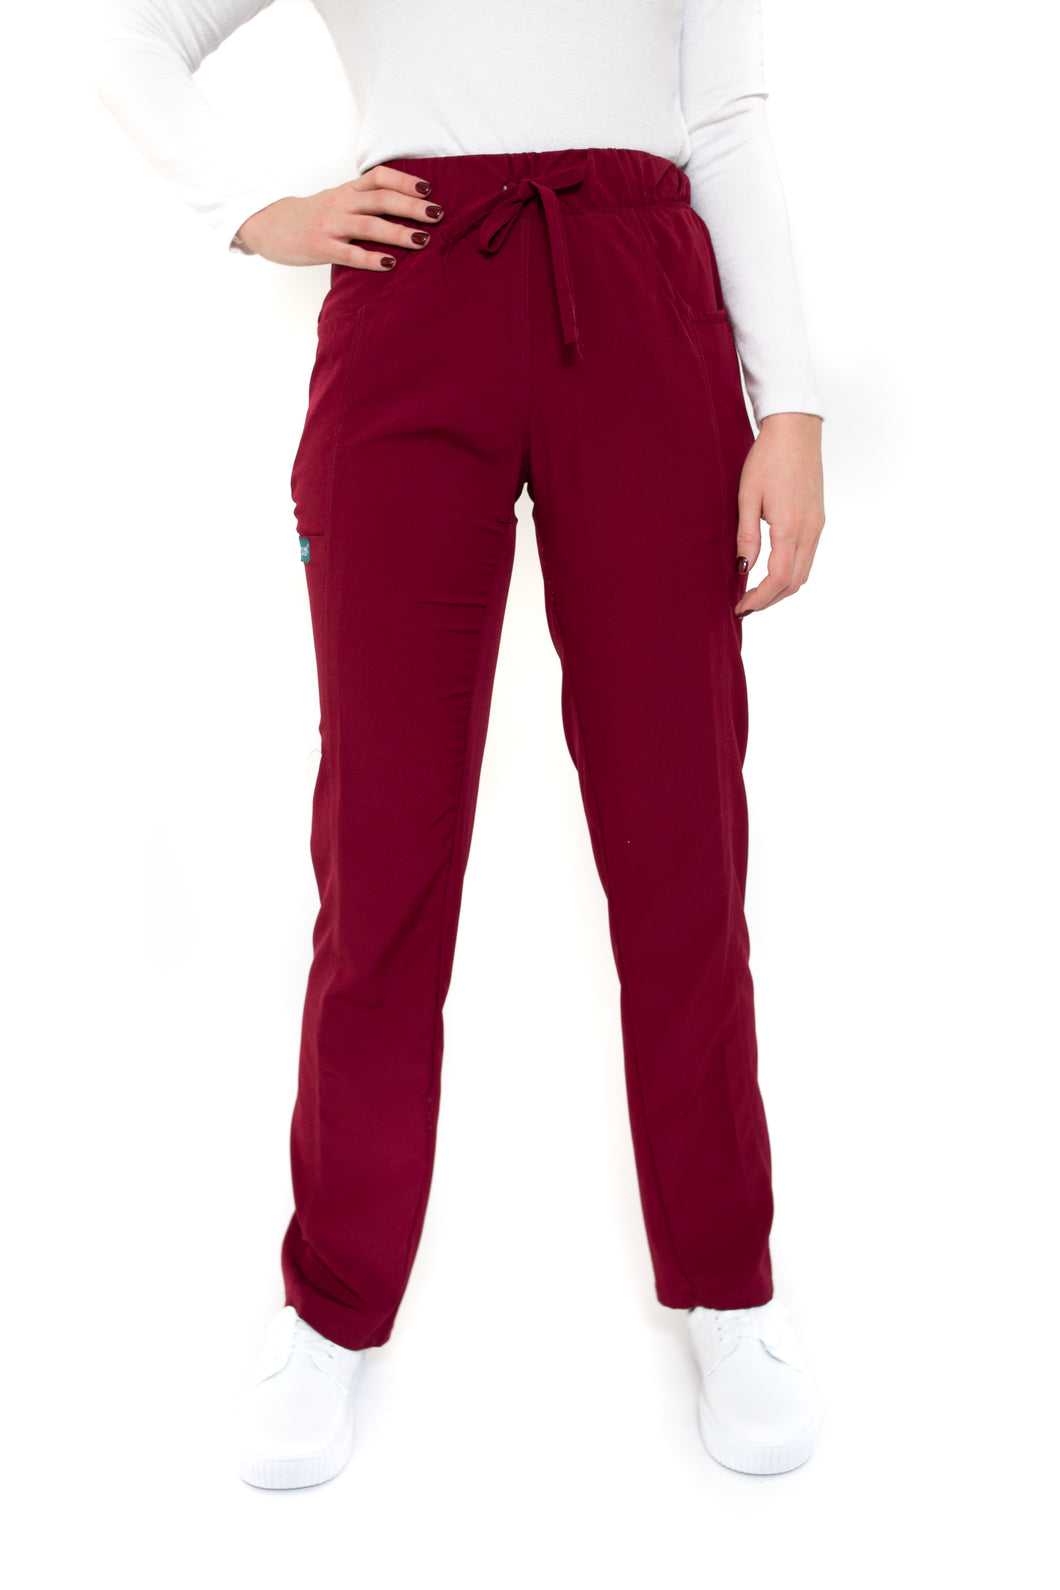 Pantalón Pant EV-120 REPELENTE A FLUIDOS-Color VINO Dama-Ana Isabel Uniformes